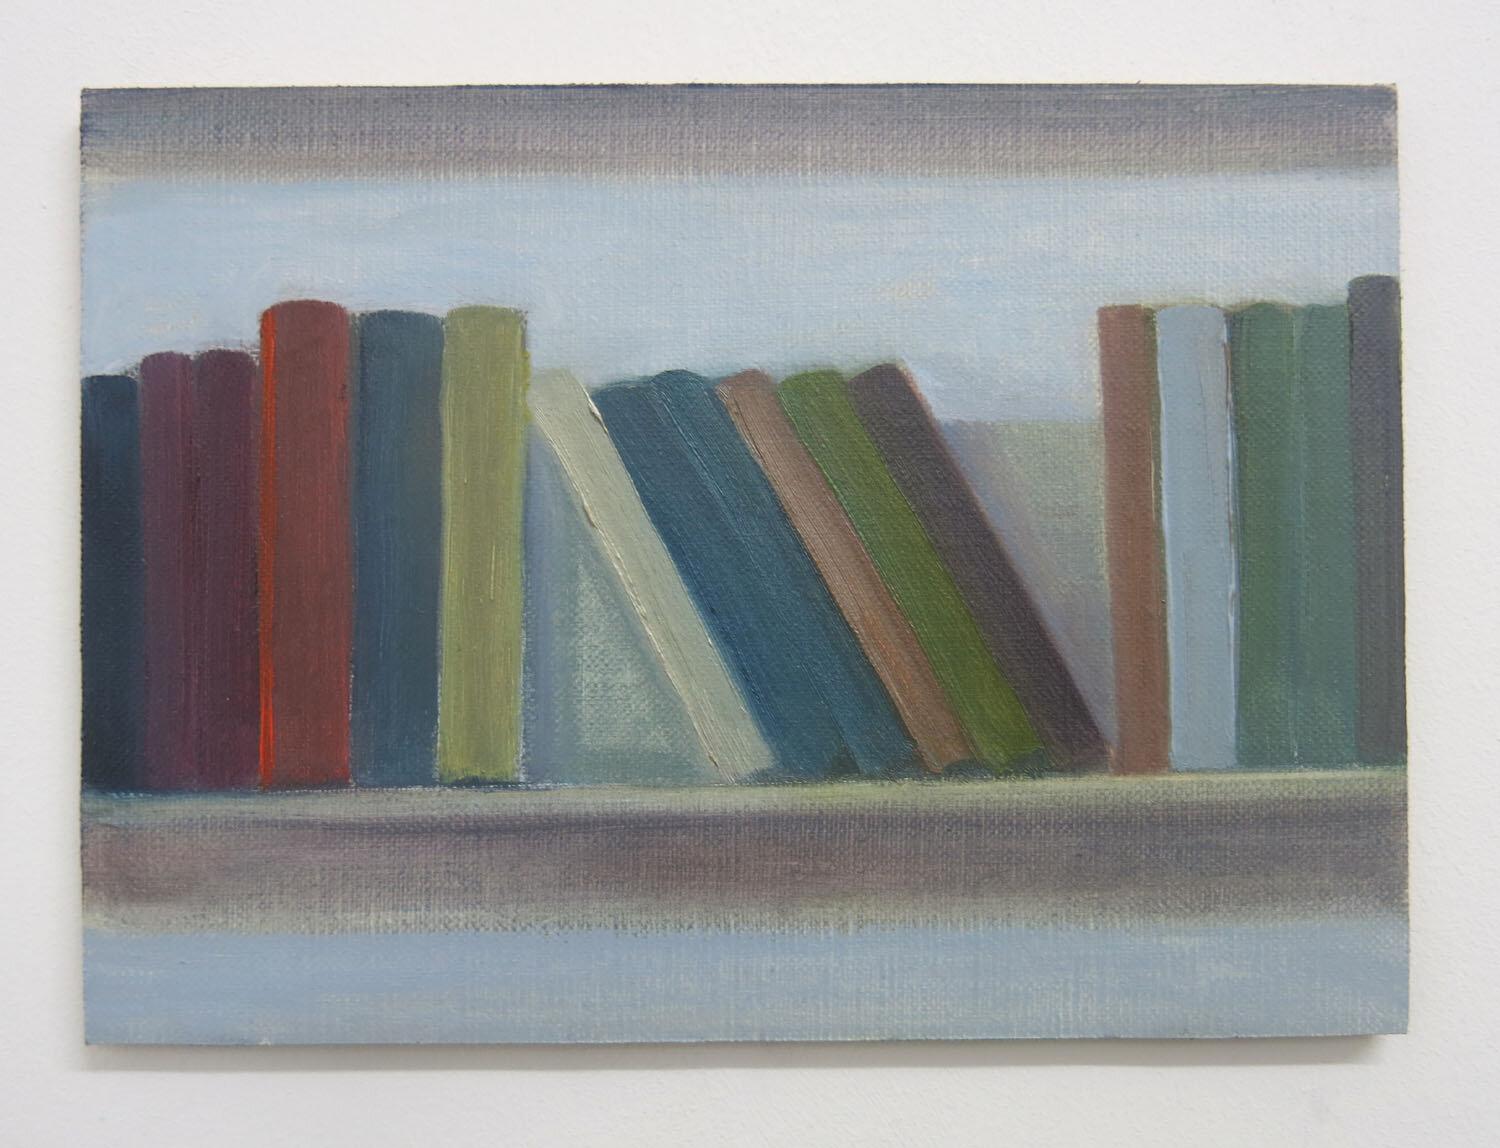   Shelf    2019, oil on canvas board, 13 x 18cm  